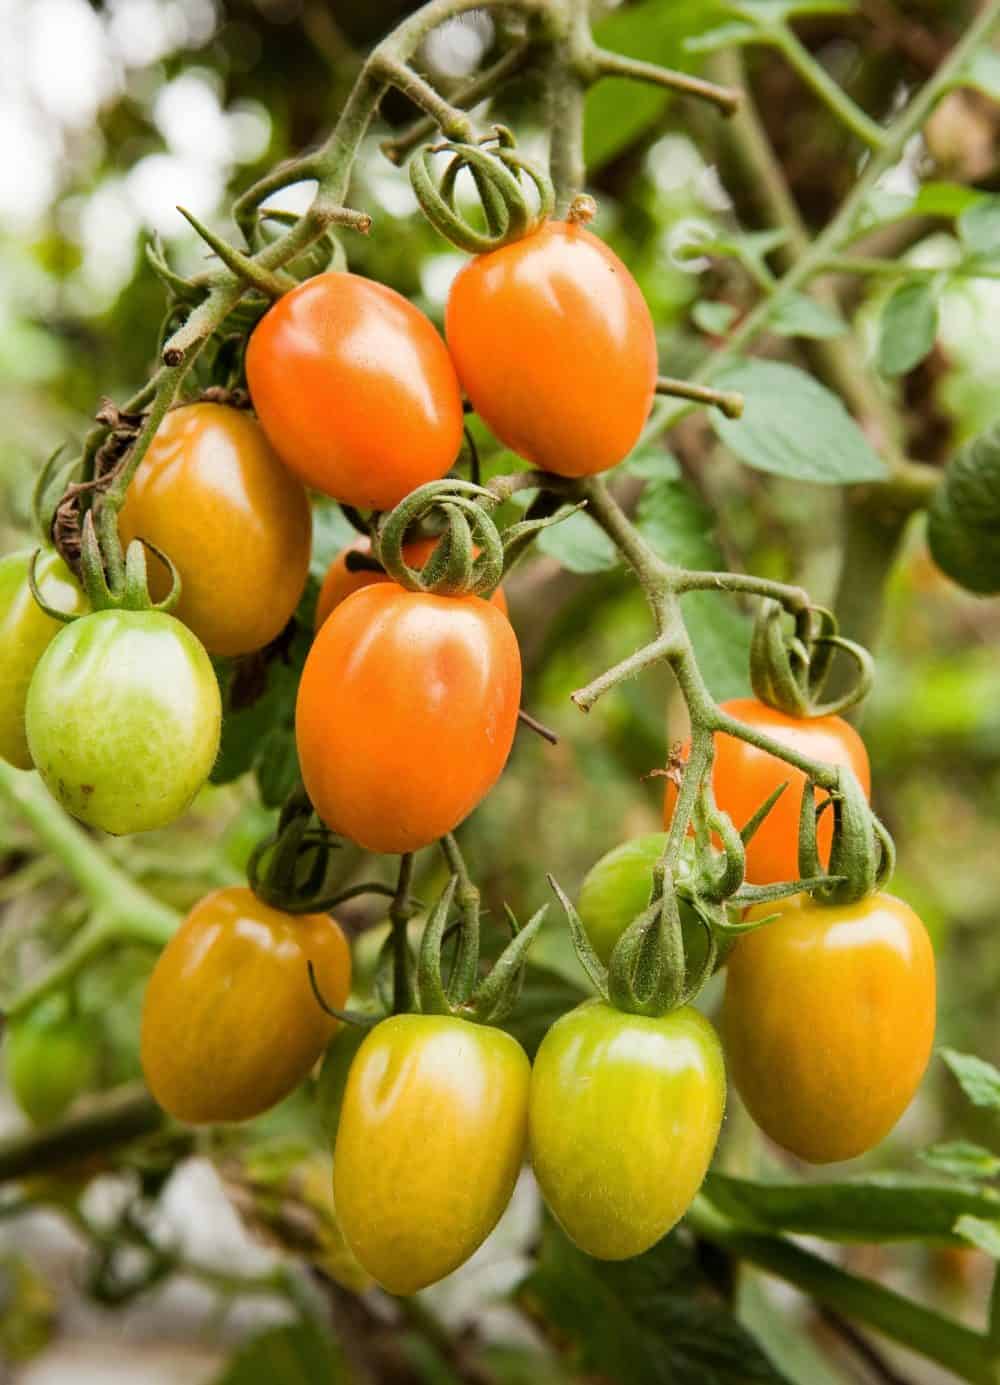 Beautiful homegrown tomatoes